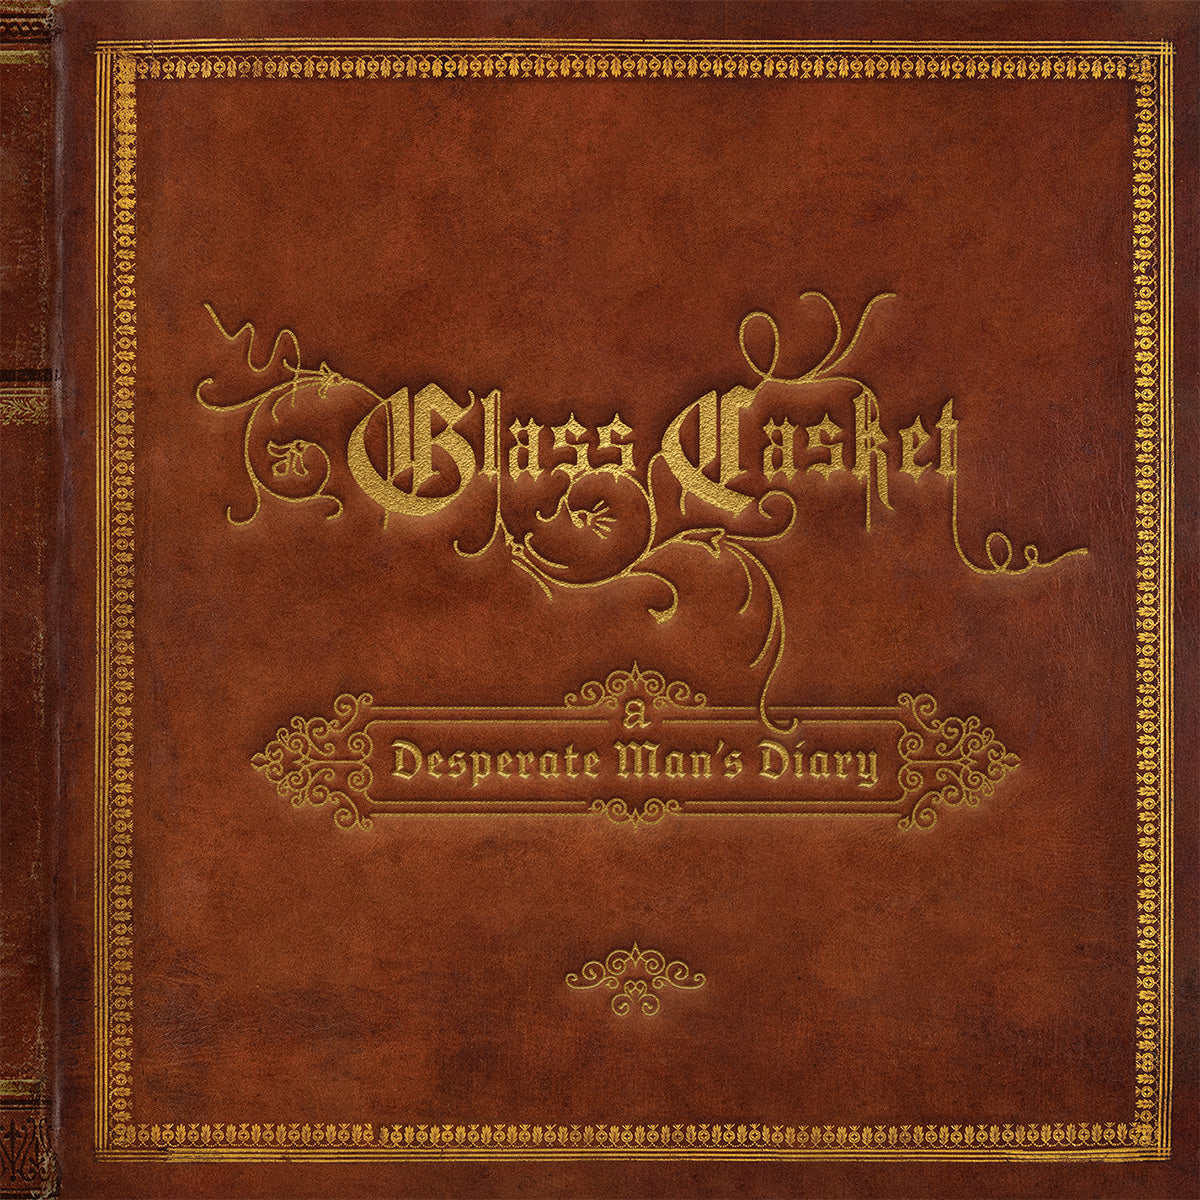 GLASS CASKET "Desperate Man's Diary" LP